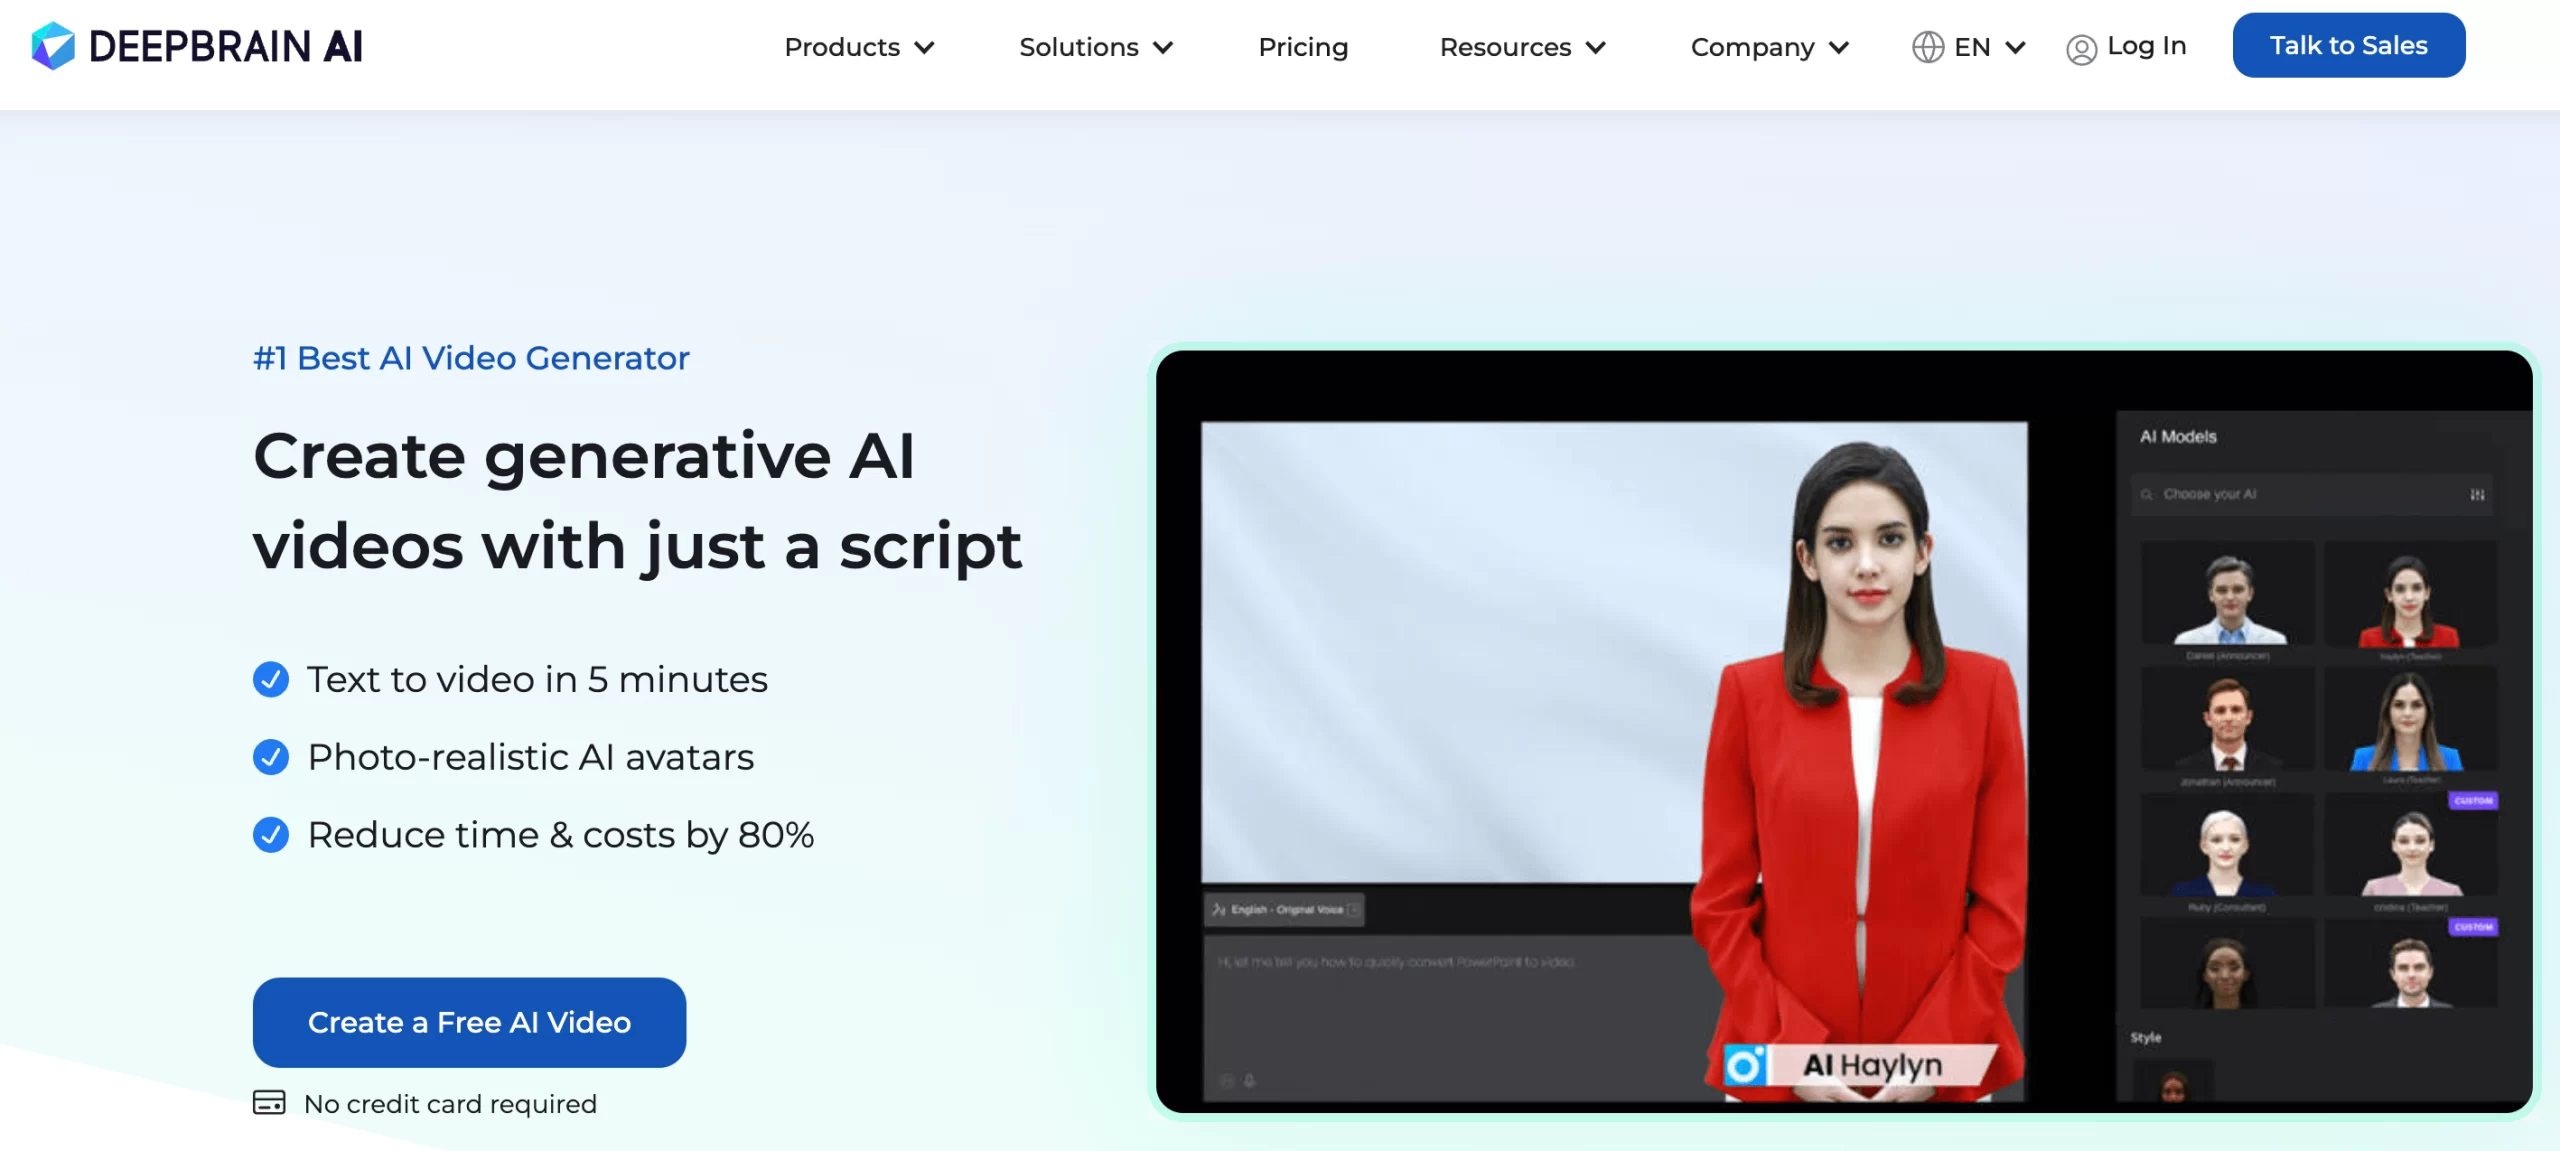 DeepBrain AI's website homepage